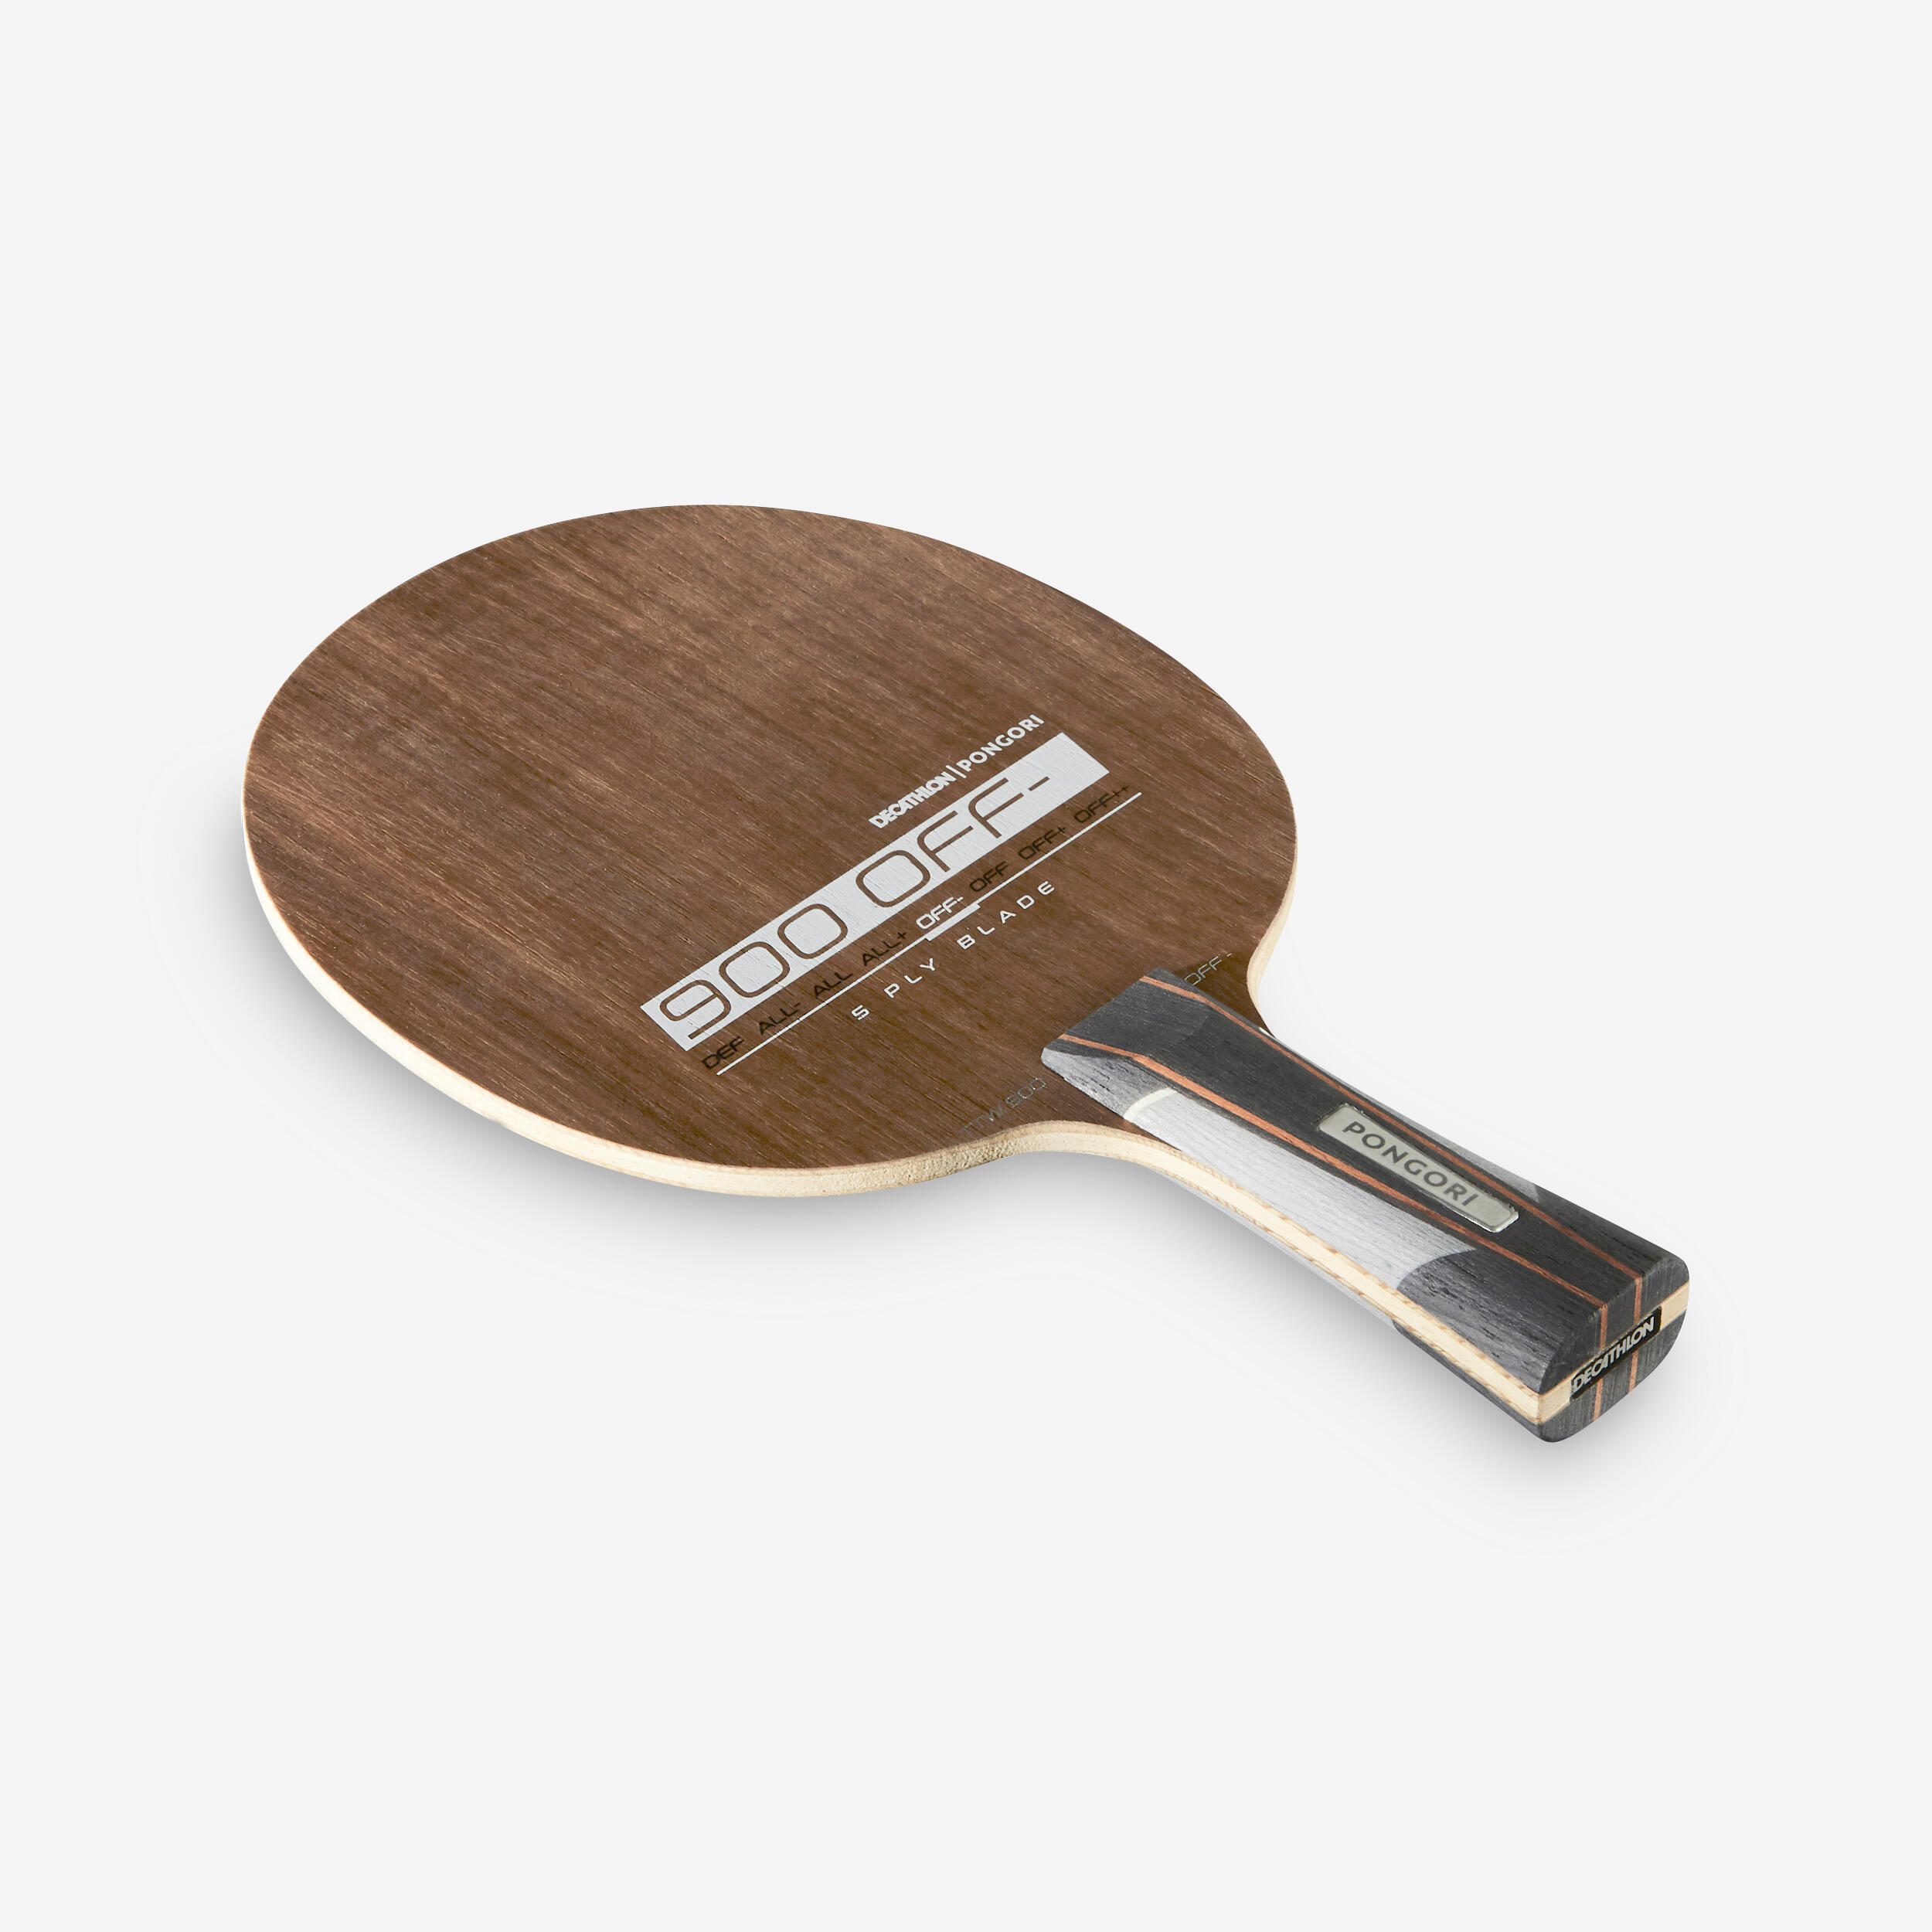 pongori table tennis racket